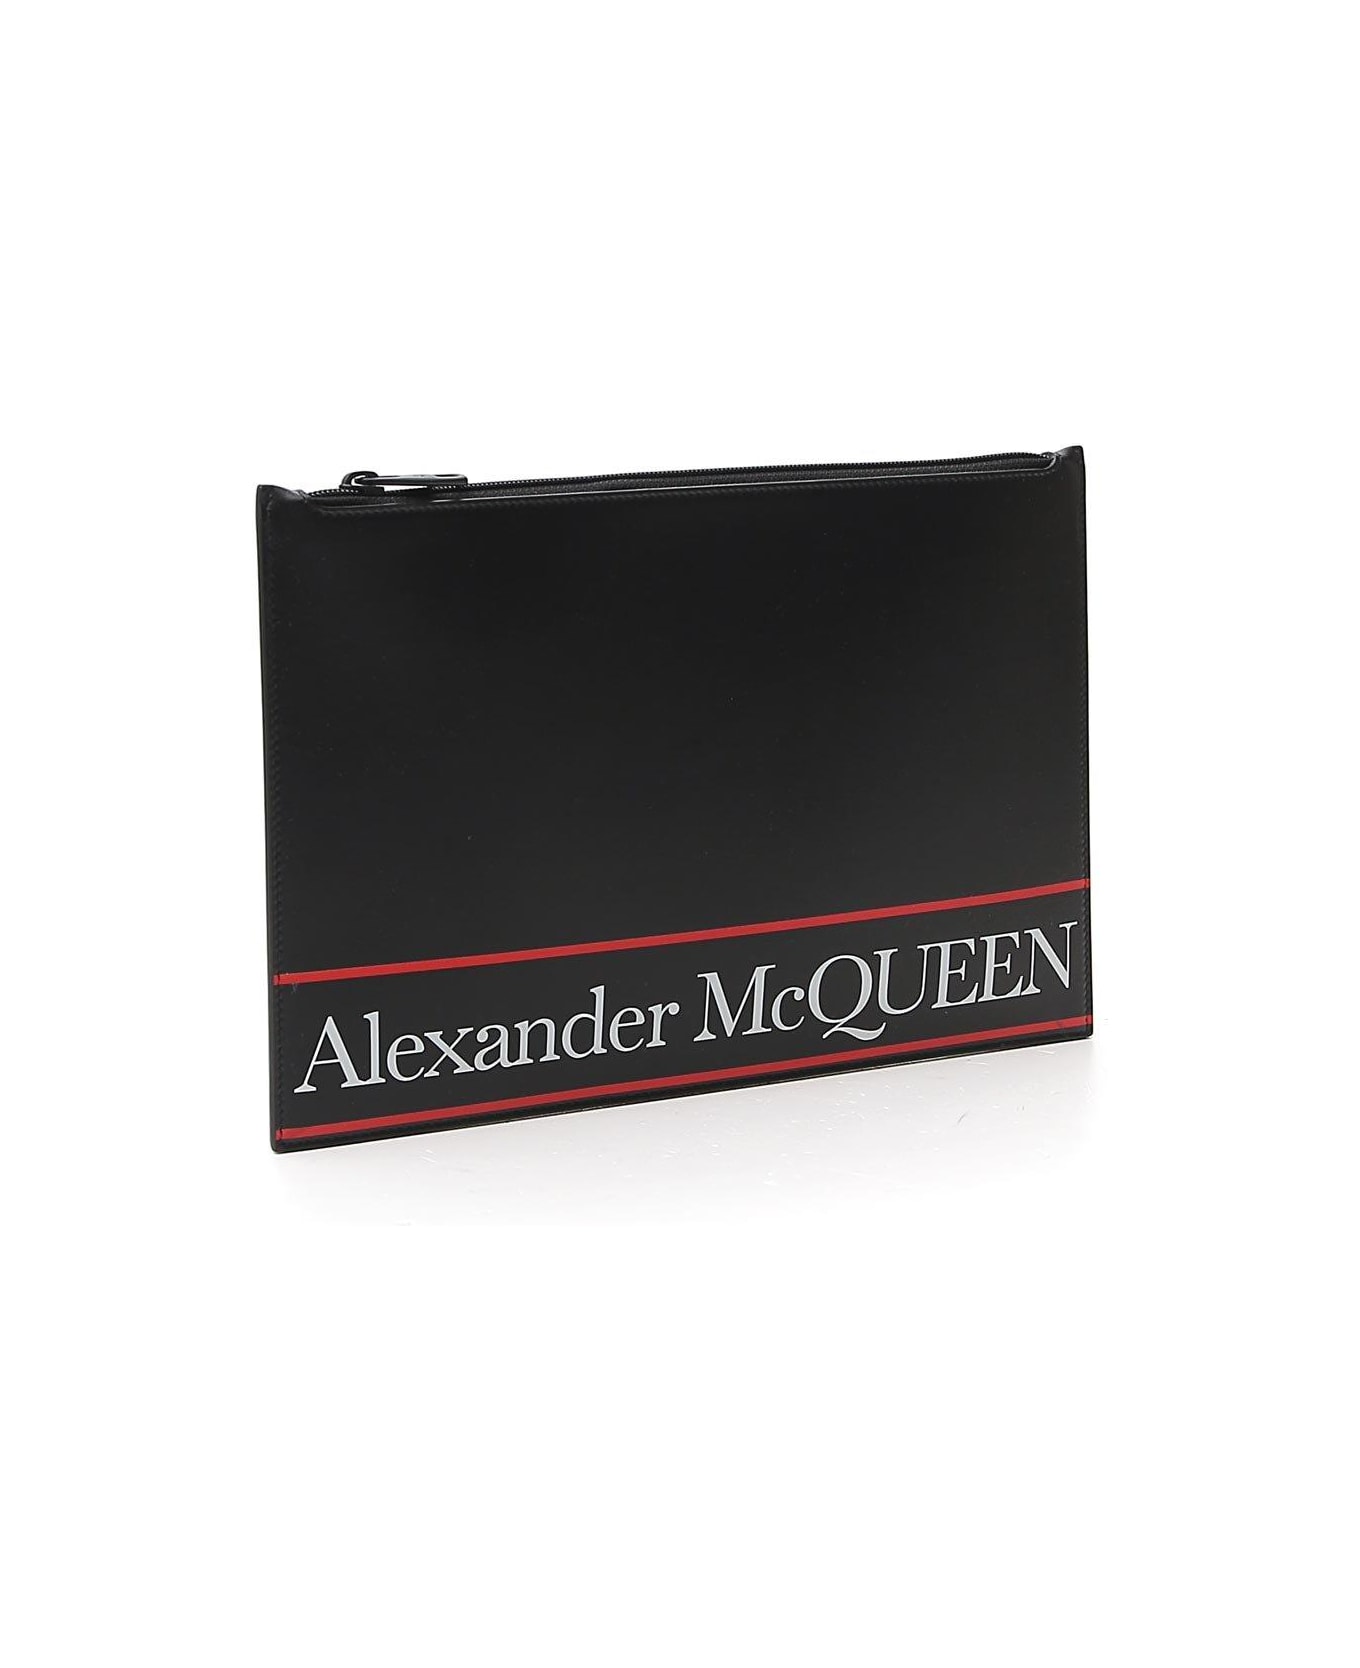 Alexander McQueen Logo Printed Clutch Bag - Black